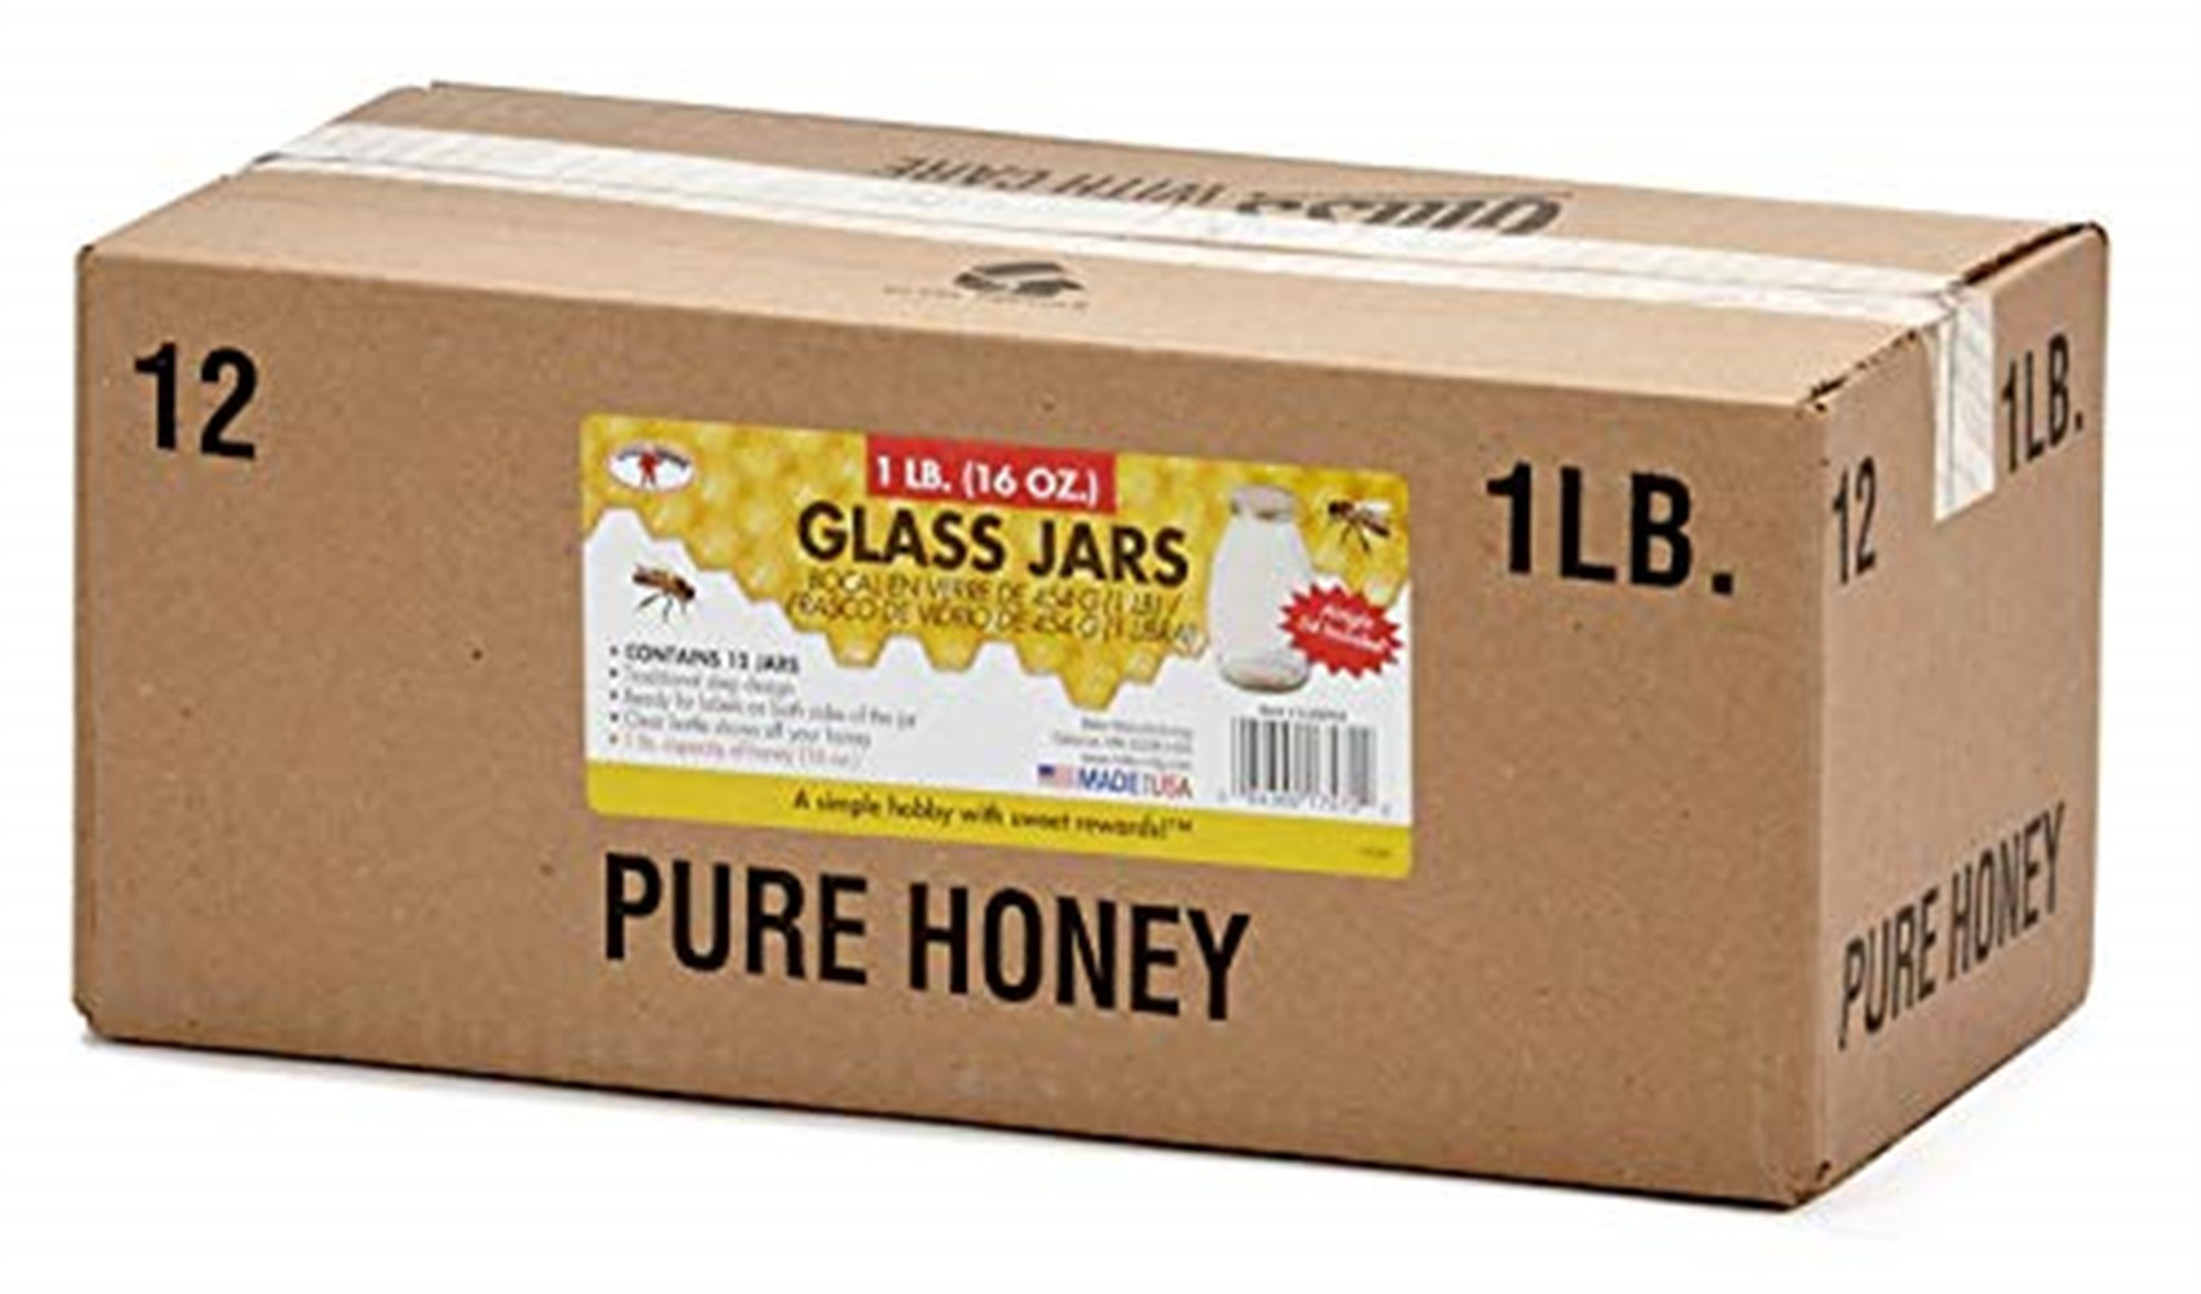 Little Giant Glass Skep Jar Honey Jar with Airtight Lid, 16 Ounce (12 Pack)